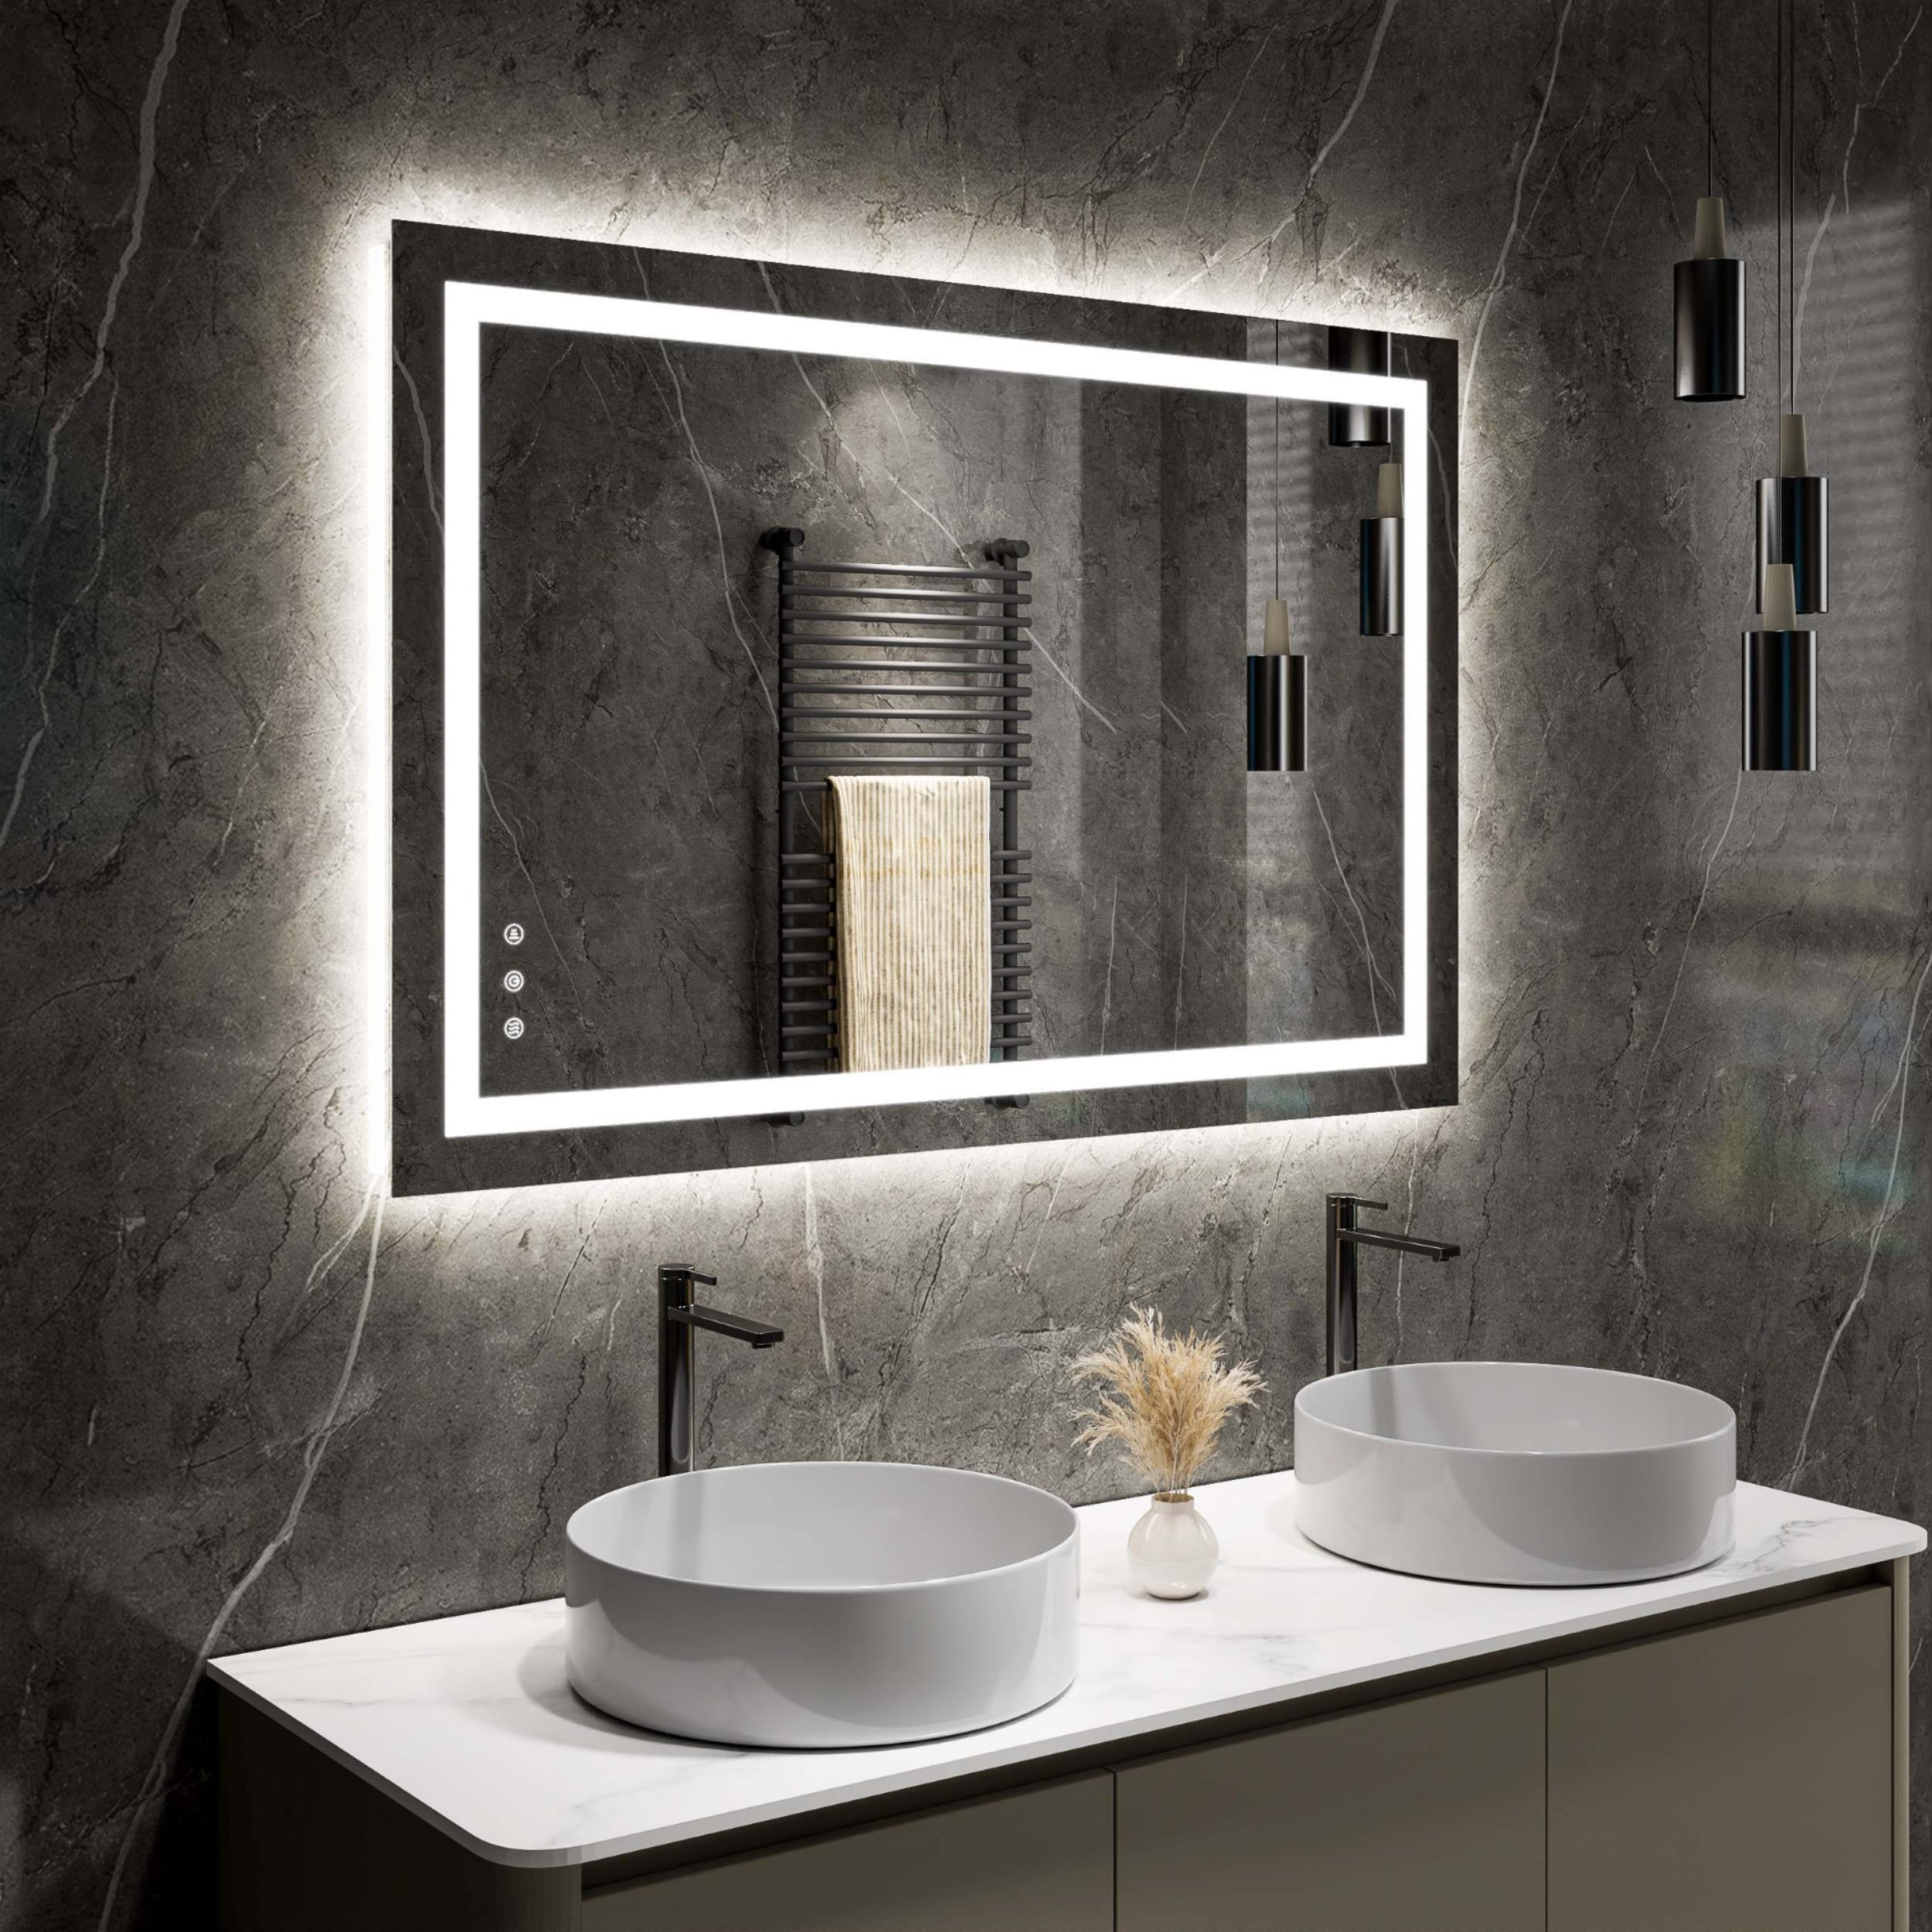 Collaborative Project: DAPAI Mirror's Partnership with a Local Las Vegas Bathroom Mirror Manufacturer